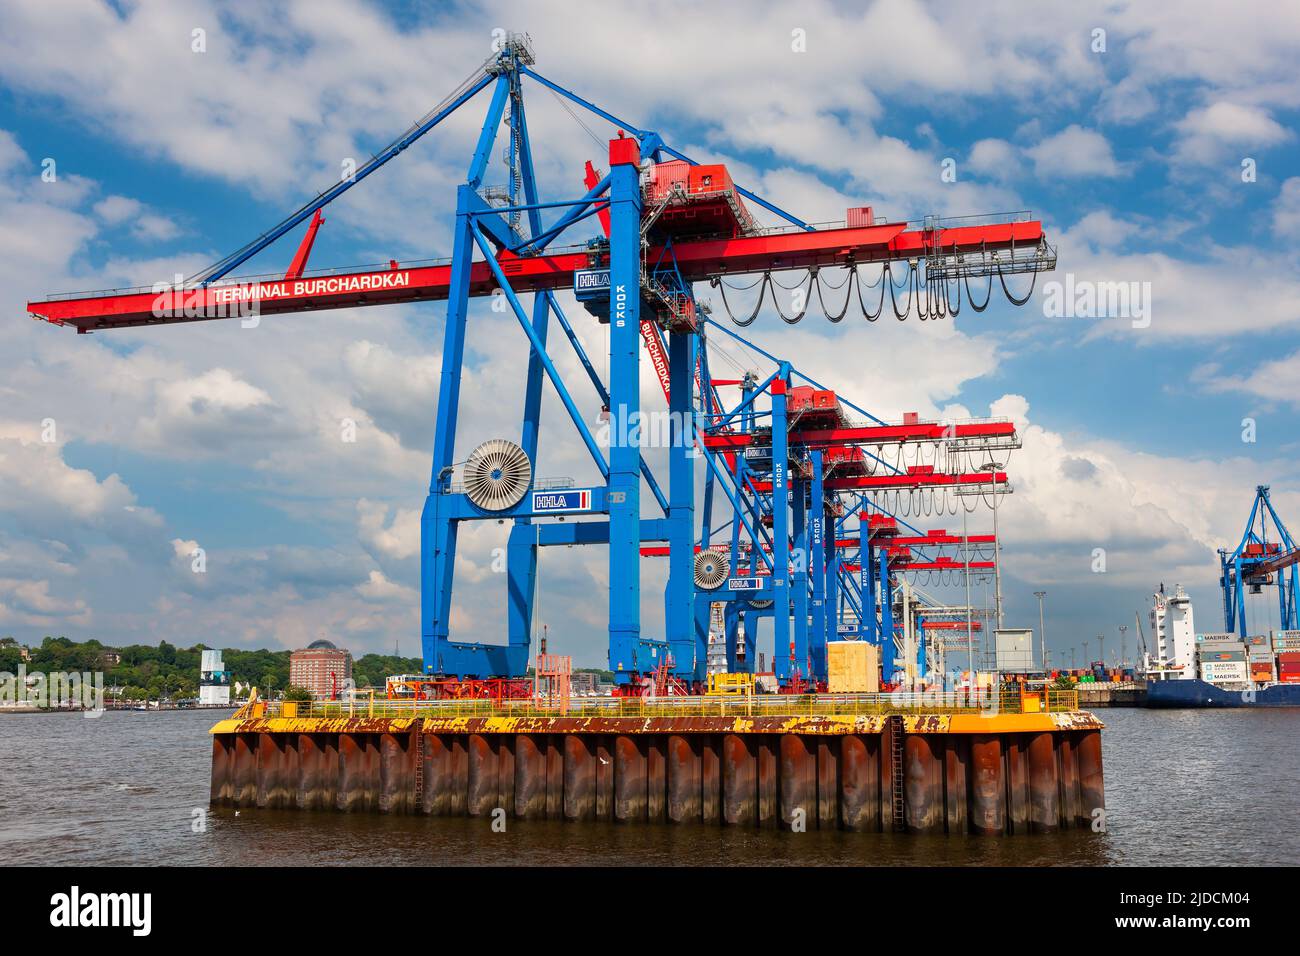 Hamburg, Germany - July 12, 2011 : Container Terminal Burchardkai  at Hamburg Harbor. Industry for loading and unloading cargo transport ships. Stock Photo